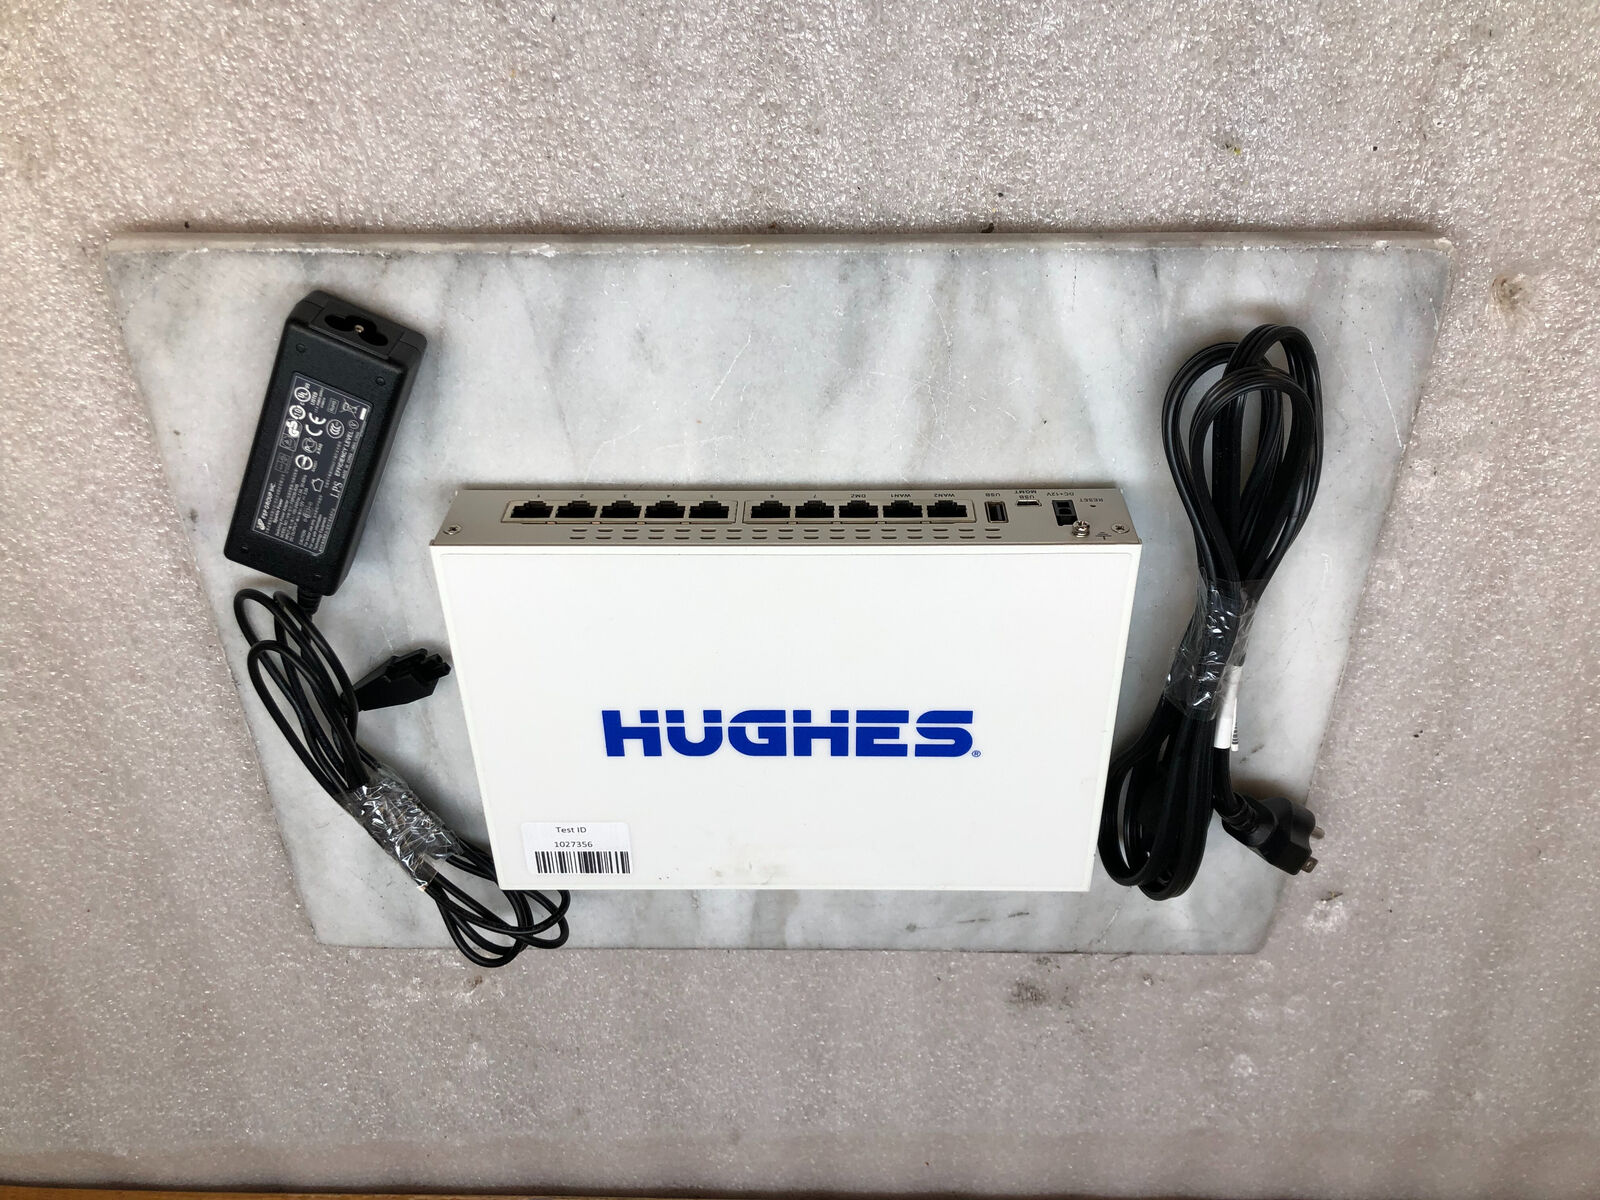 Fortinet Hughes HR4700 Fortigate-60D FG-60D Firewall Security Appliance W/Power